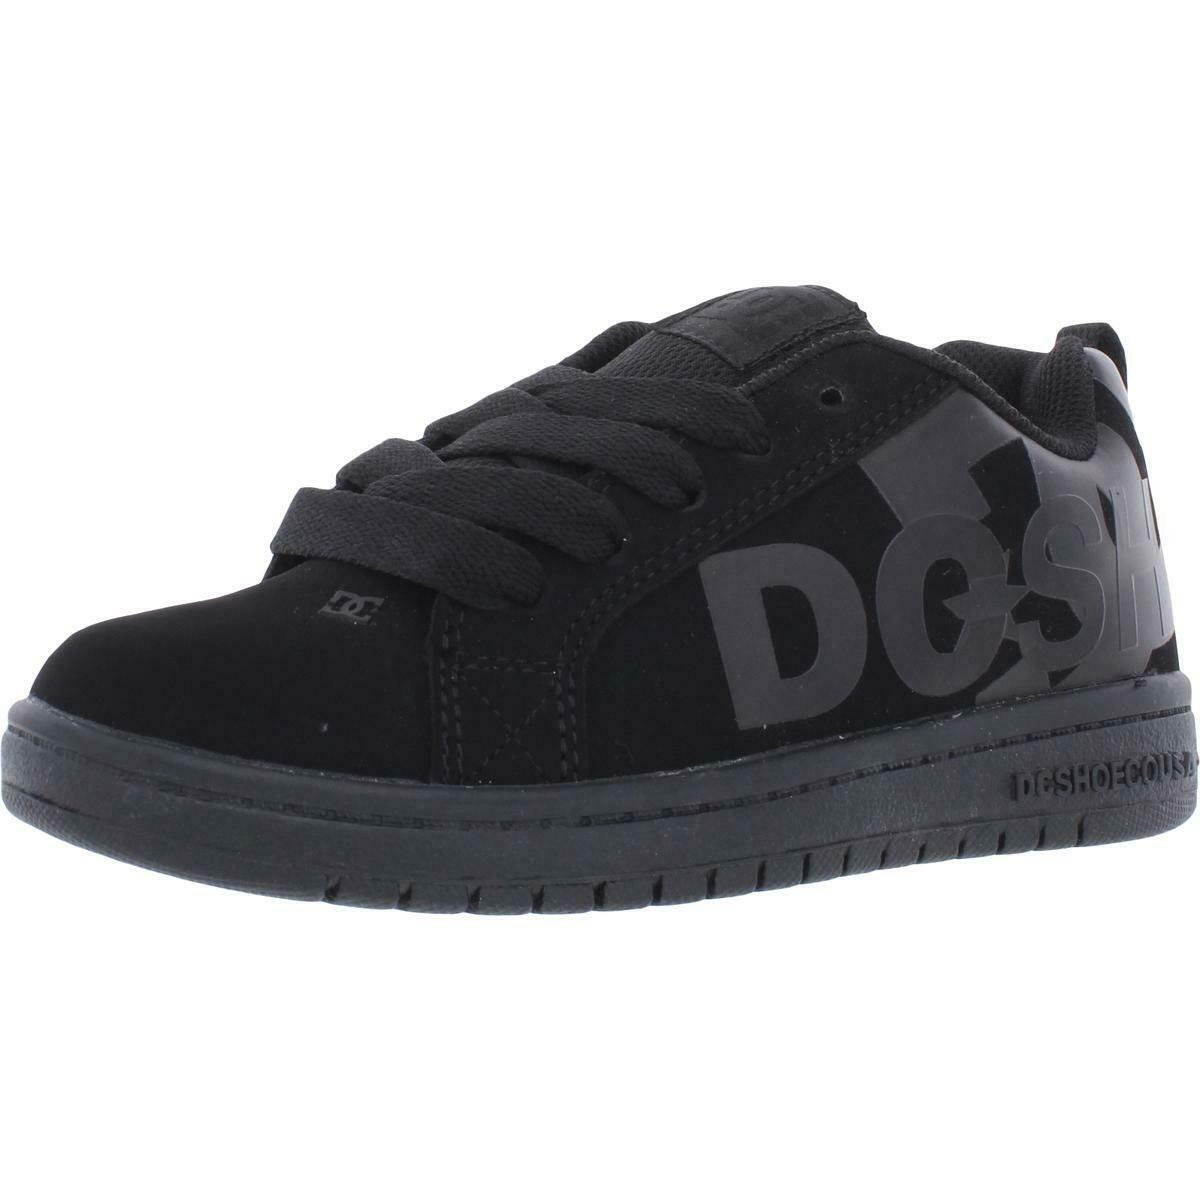 Dc Boys Court Graffik Black Skateboarding Shoes 2 Medium (d) Little Kid 0351